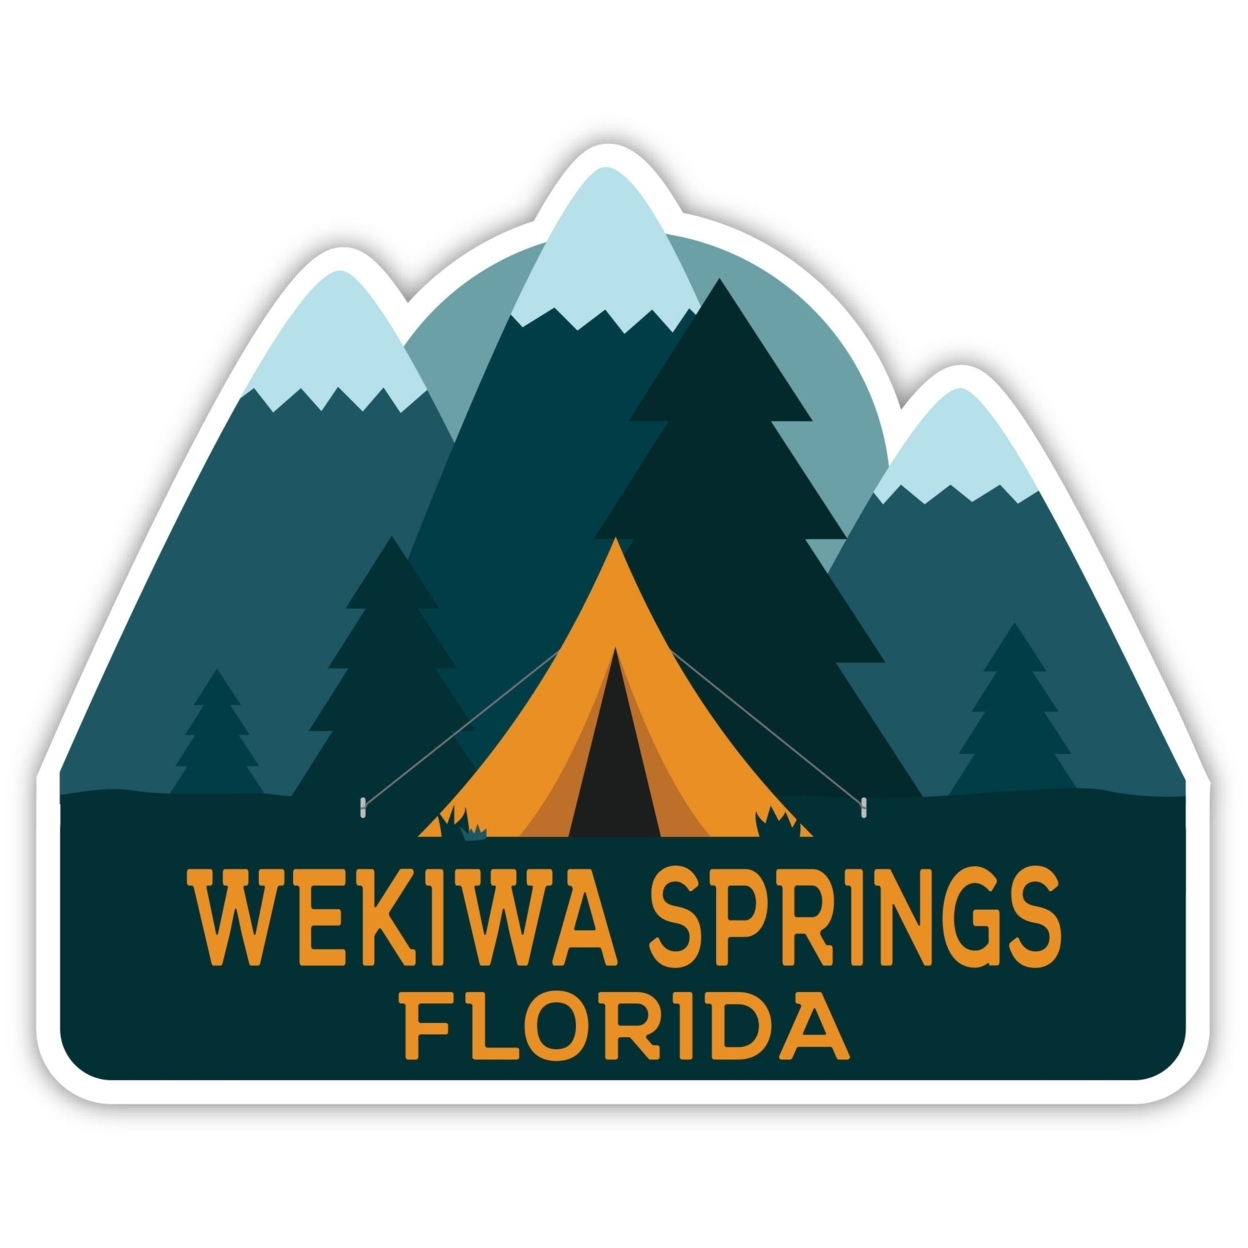 Wekiwa Springs Florida Souvenir Decorative Stickers (Choose Theme And Size) - Single Unit, 4-Inch, Tent